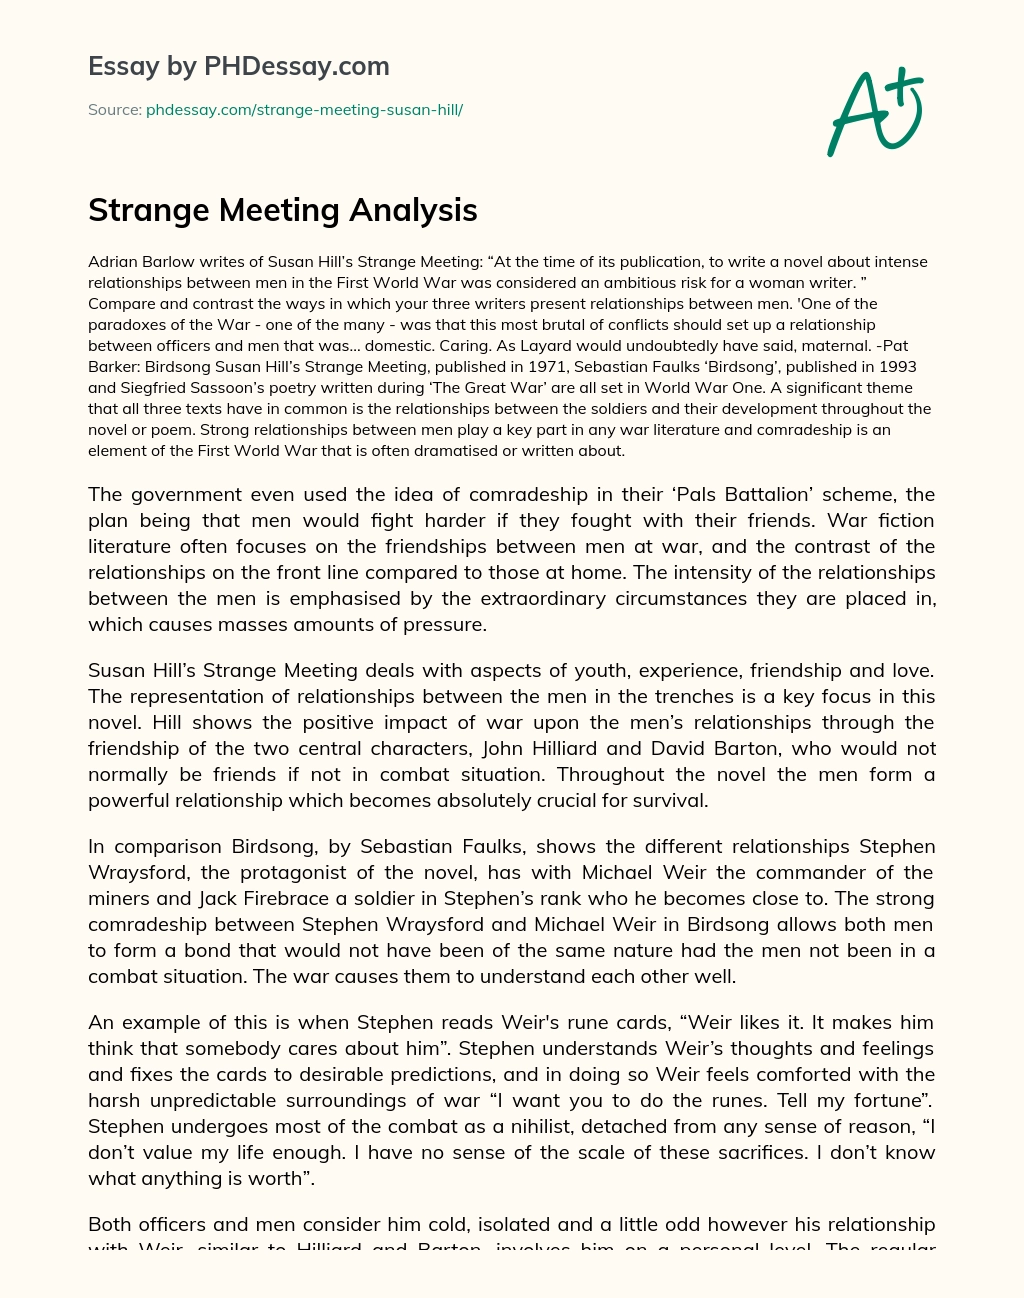 Strange Meeting Analysis essay